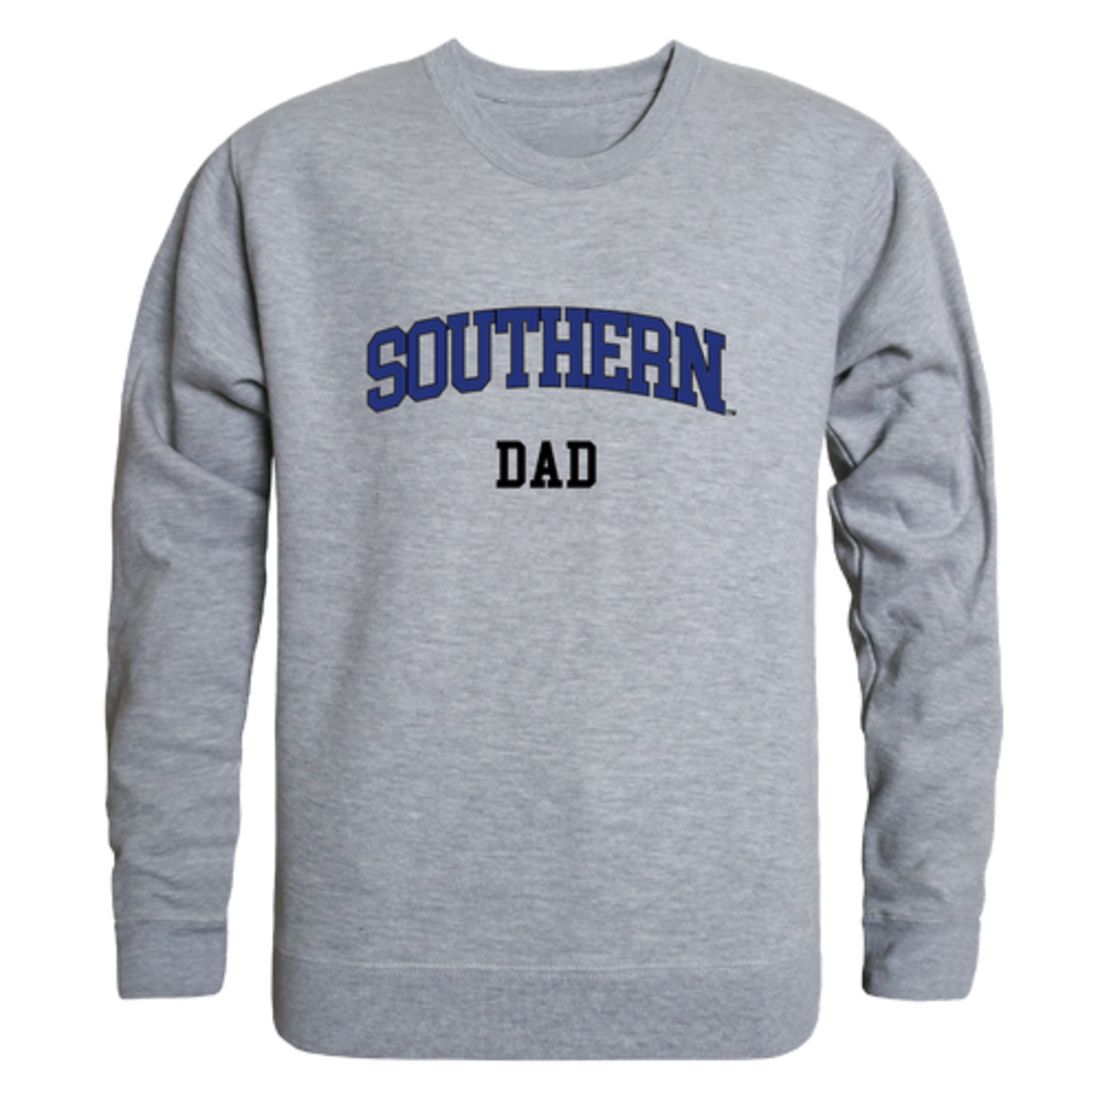 Southern Connecticut State University Owls Dad Fleece Crewneck Pullover Sweatshirt